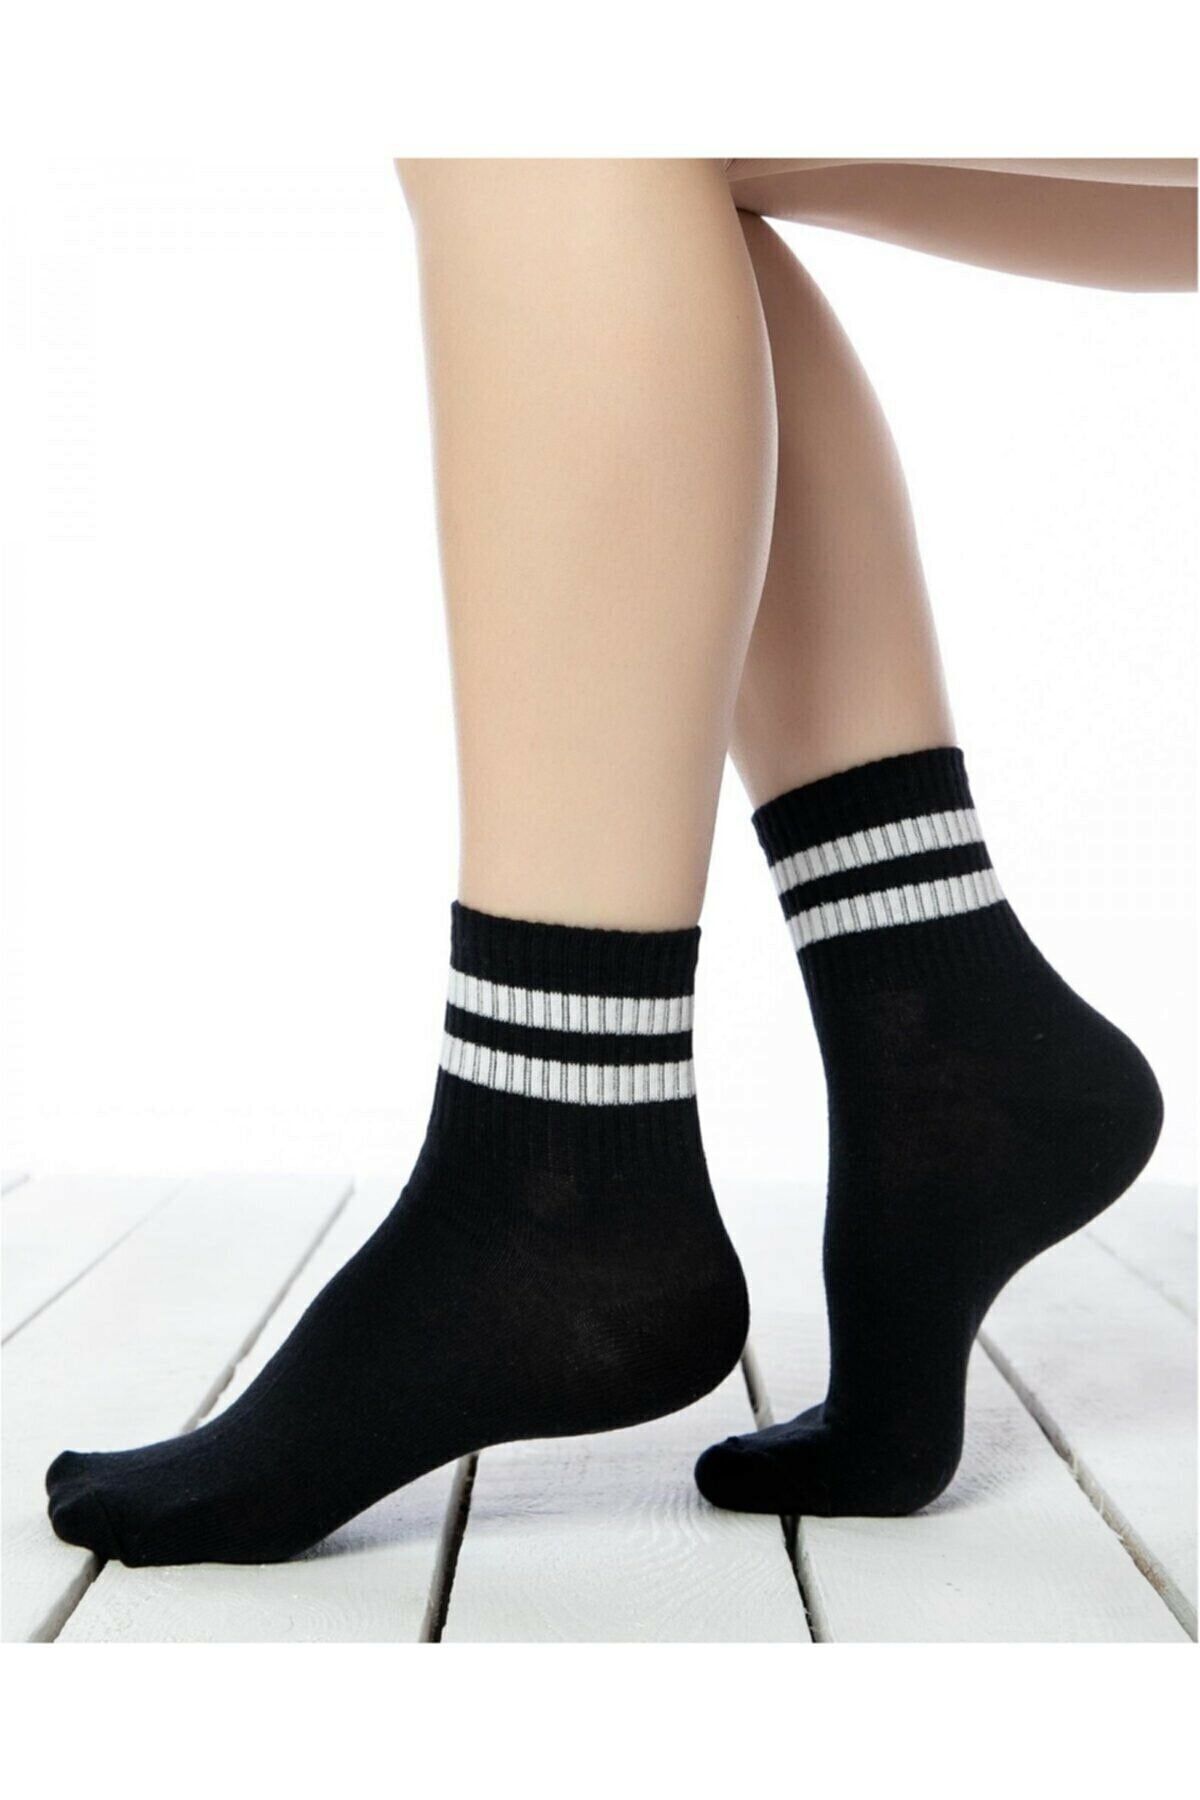 İkonik Socks Unisex 3'lü Siyah Çizgili Kolej Çorabı